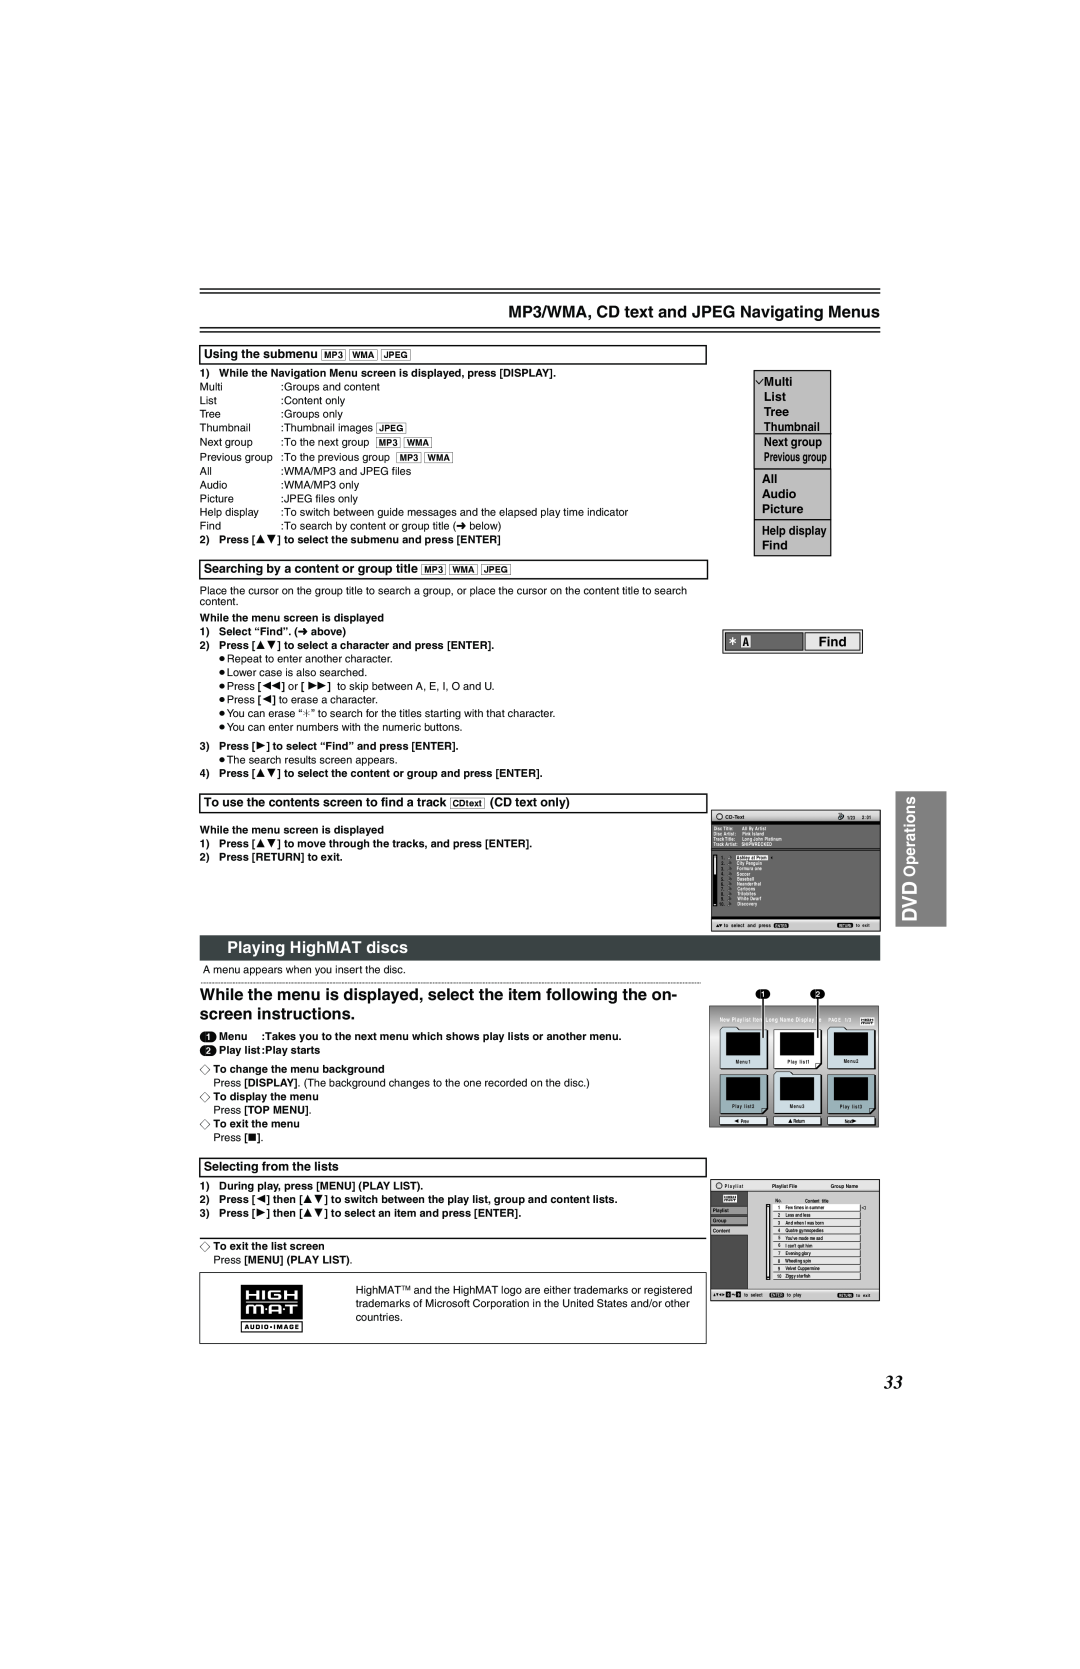 Panasonic NV-VP32 Series manual MP3/WMA, CD text and JPEG Navigating Menus, Playing HighMAT discs, Find, DVD Operations 